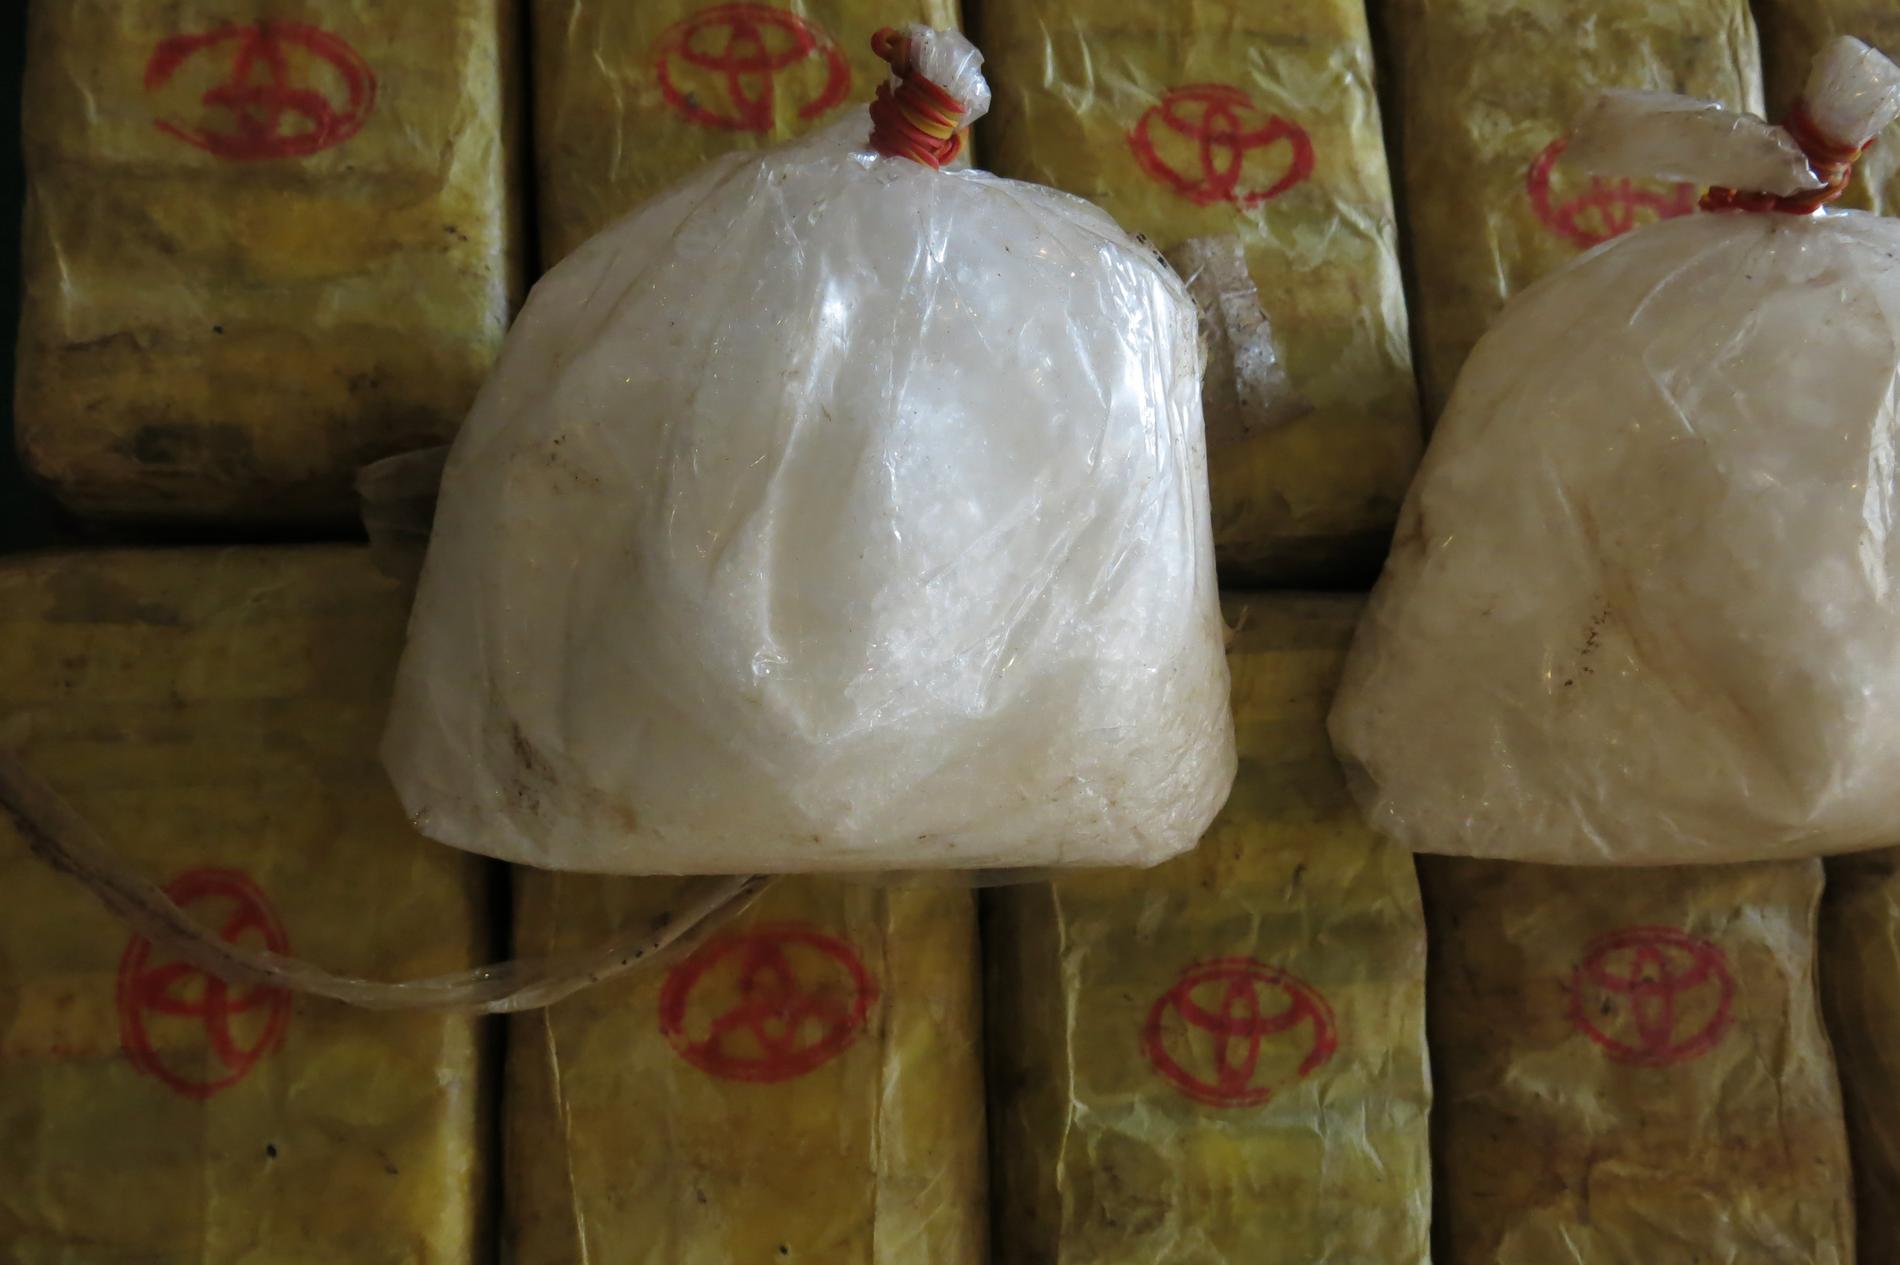 Myanmar-producerad metamfetamin. Arkivbild.